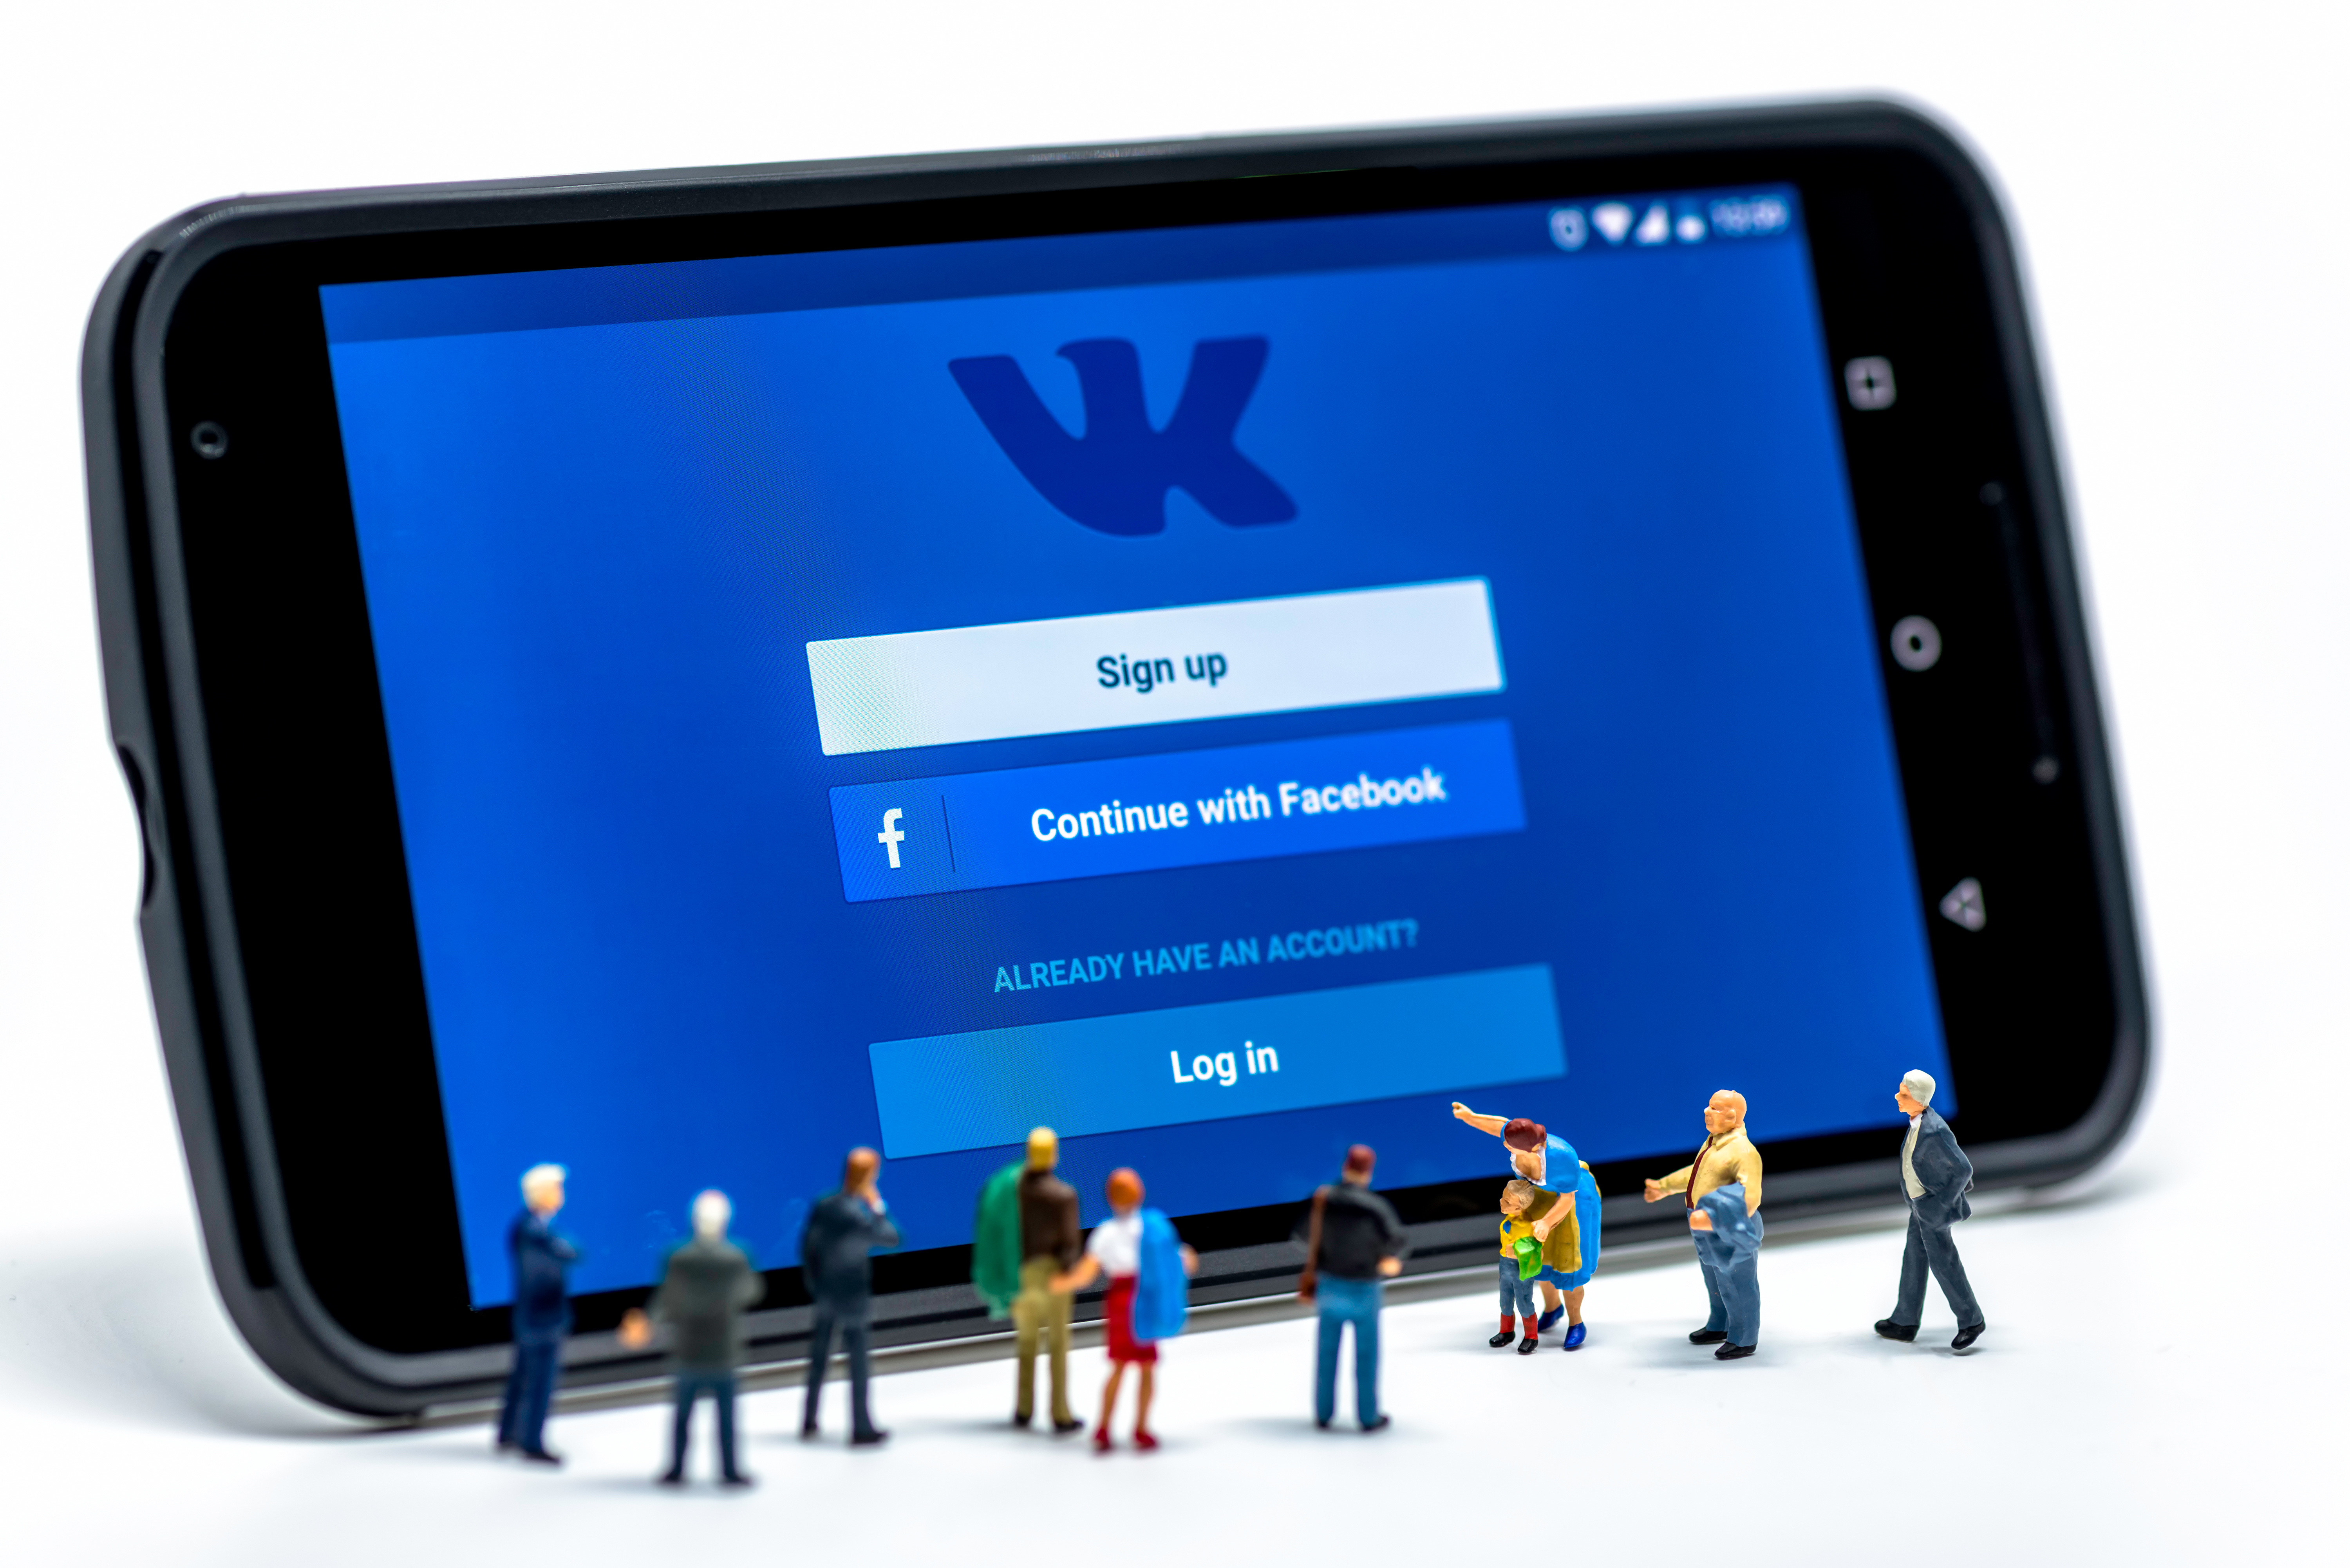 Meet Vkontakte: Russia’s biggest social network